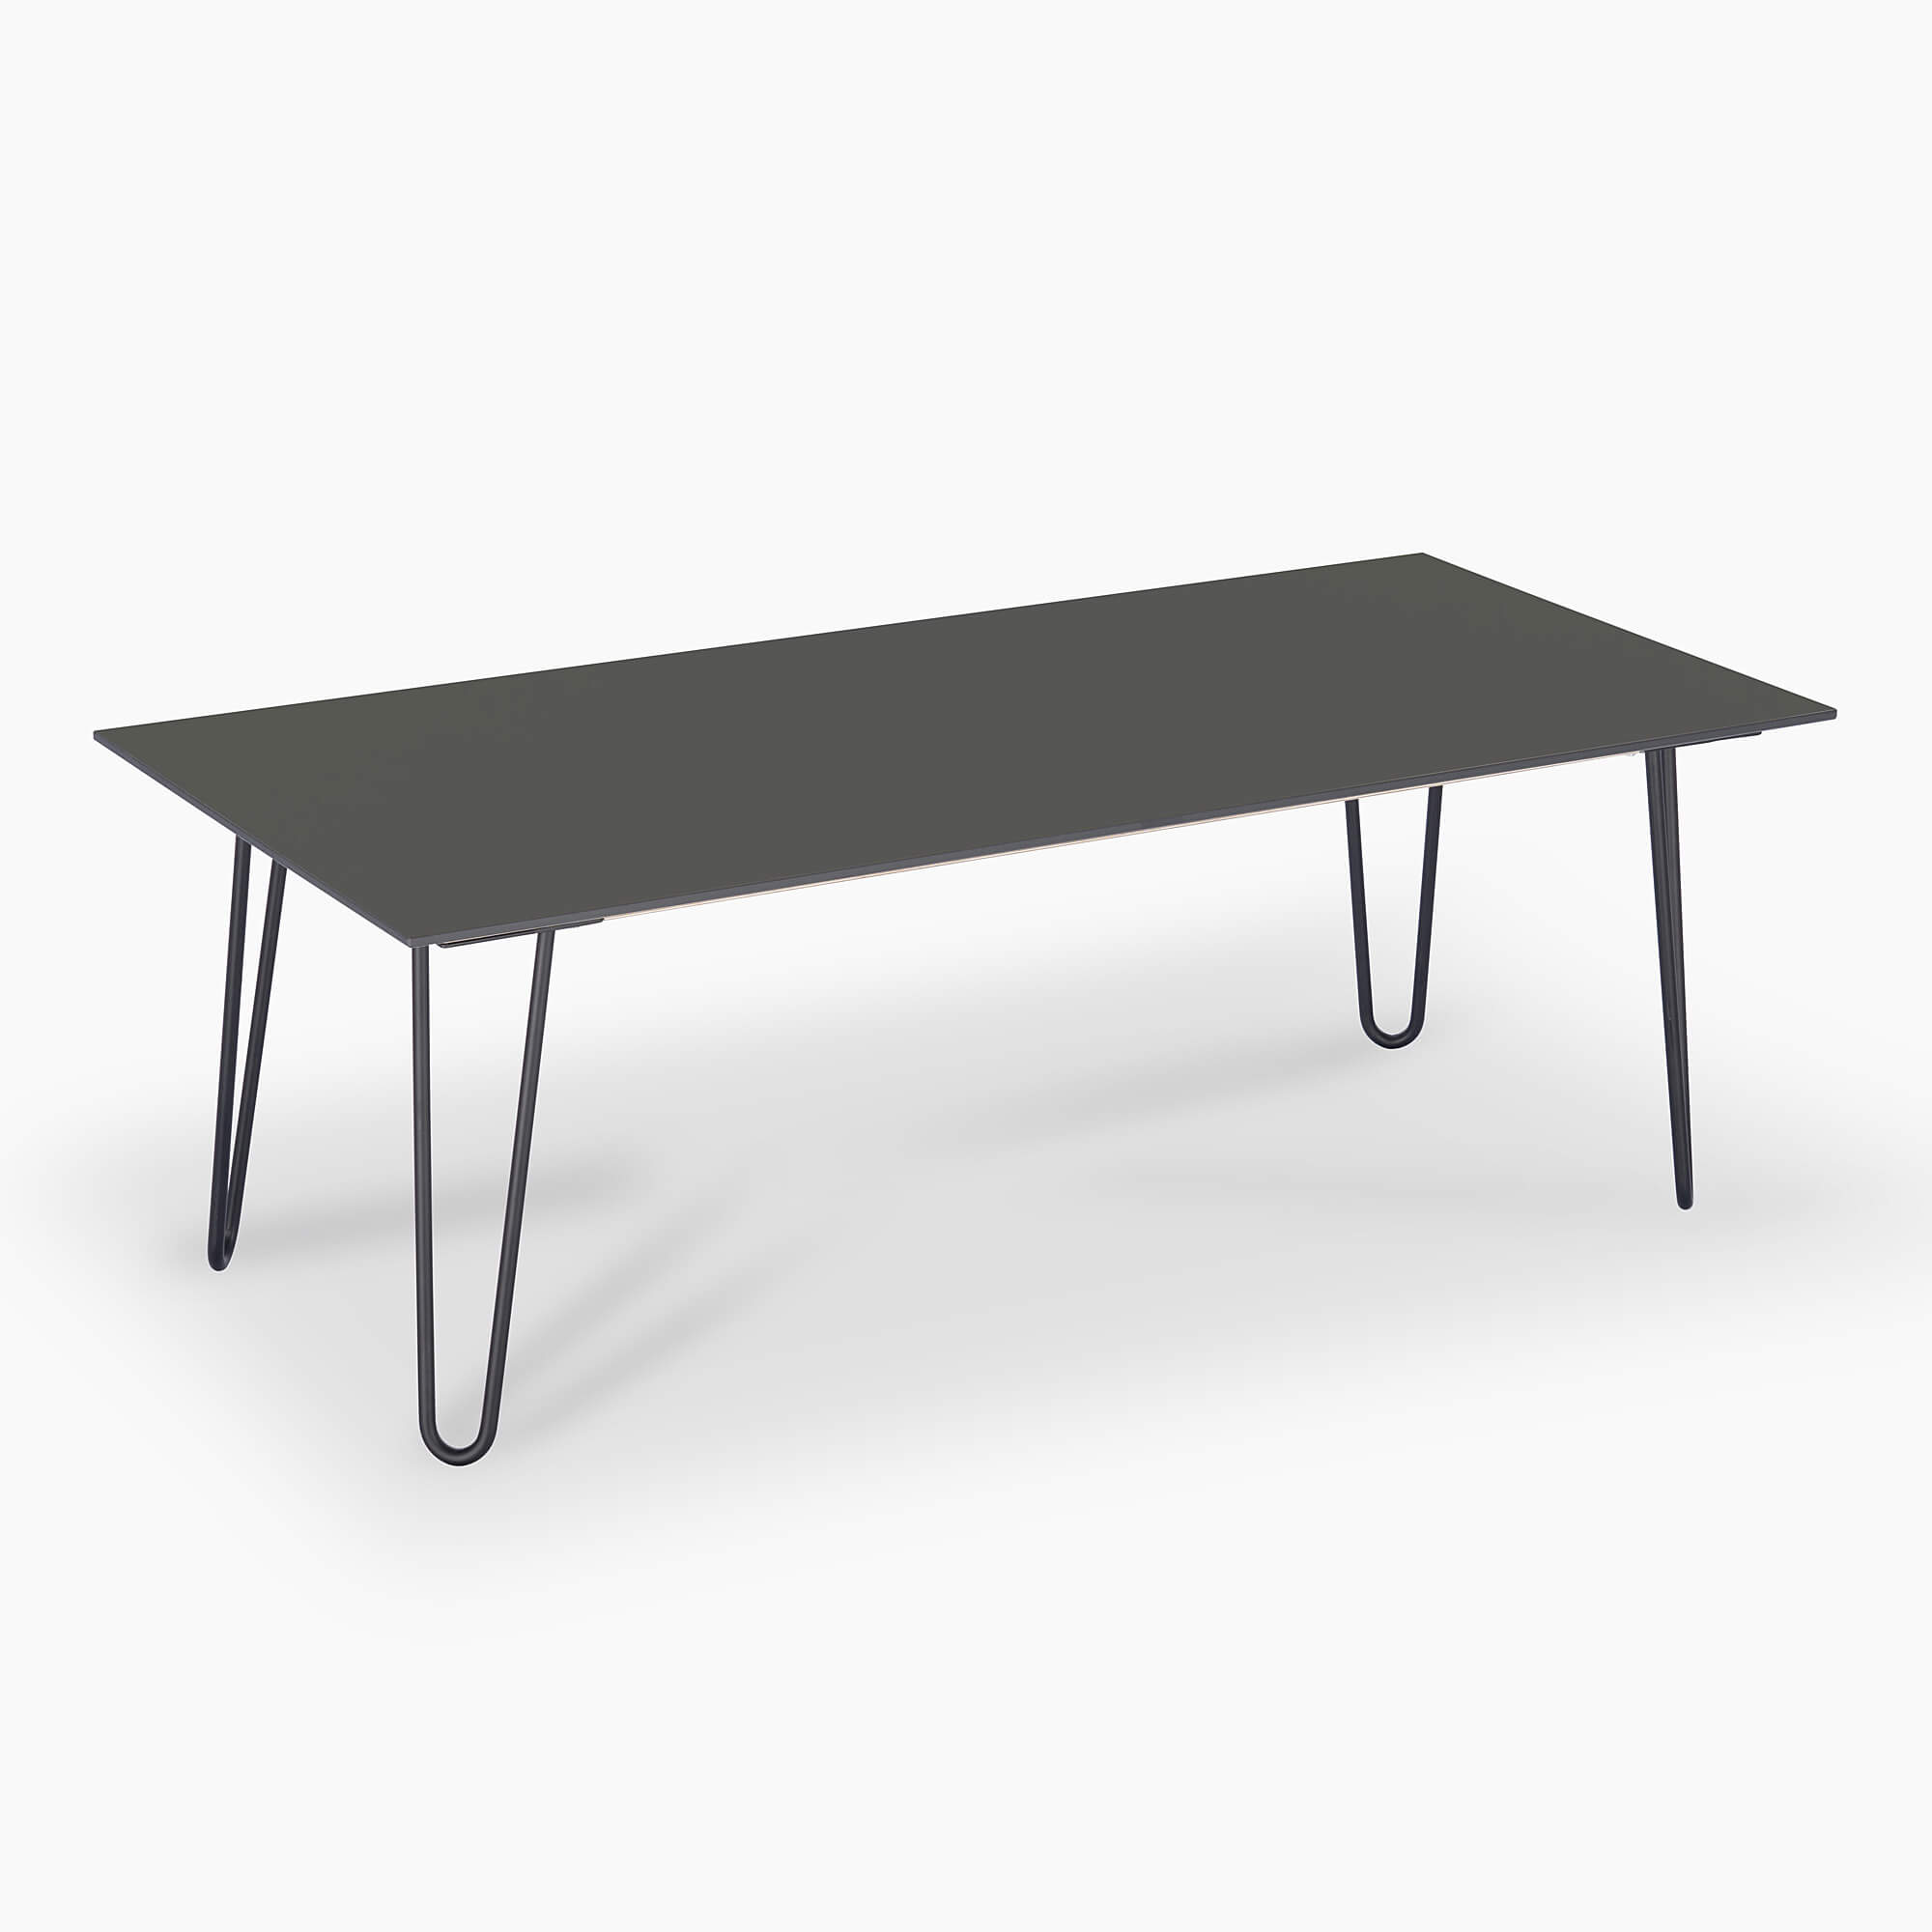 Couch-table-rectangular-long-dark-grey-black-powder-coated-legs